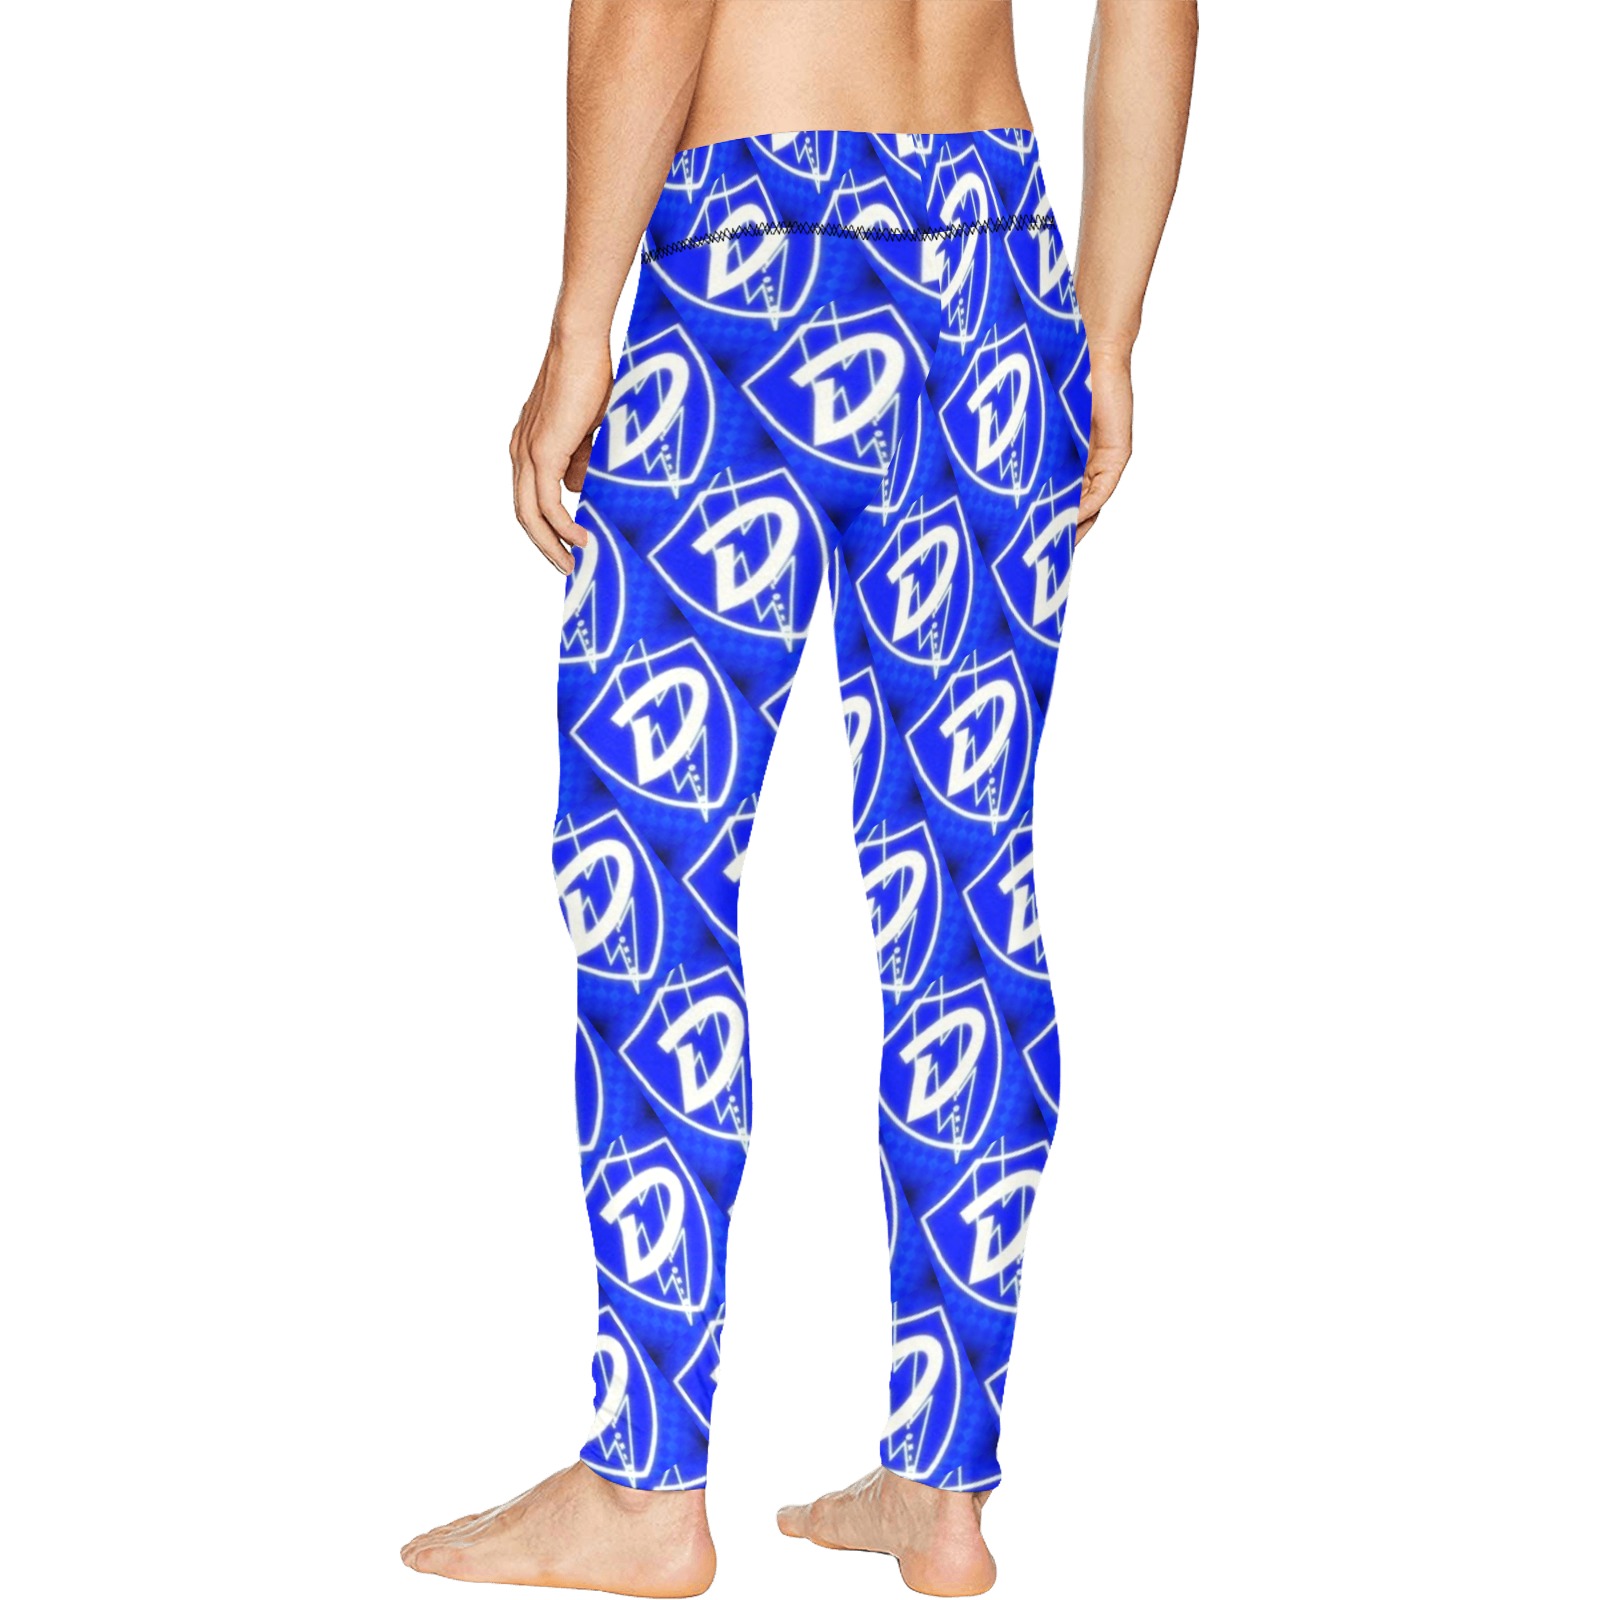 DIONIO Clothing - Blue D Shield Repeat Logo Meggings (Blue D Shield Logo) Men's All Over Print Leggings (Model L38)